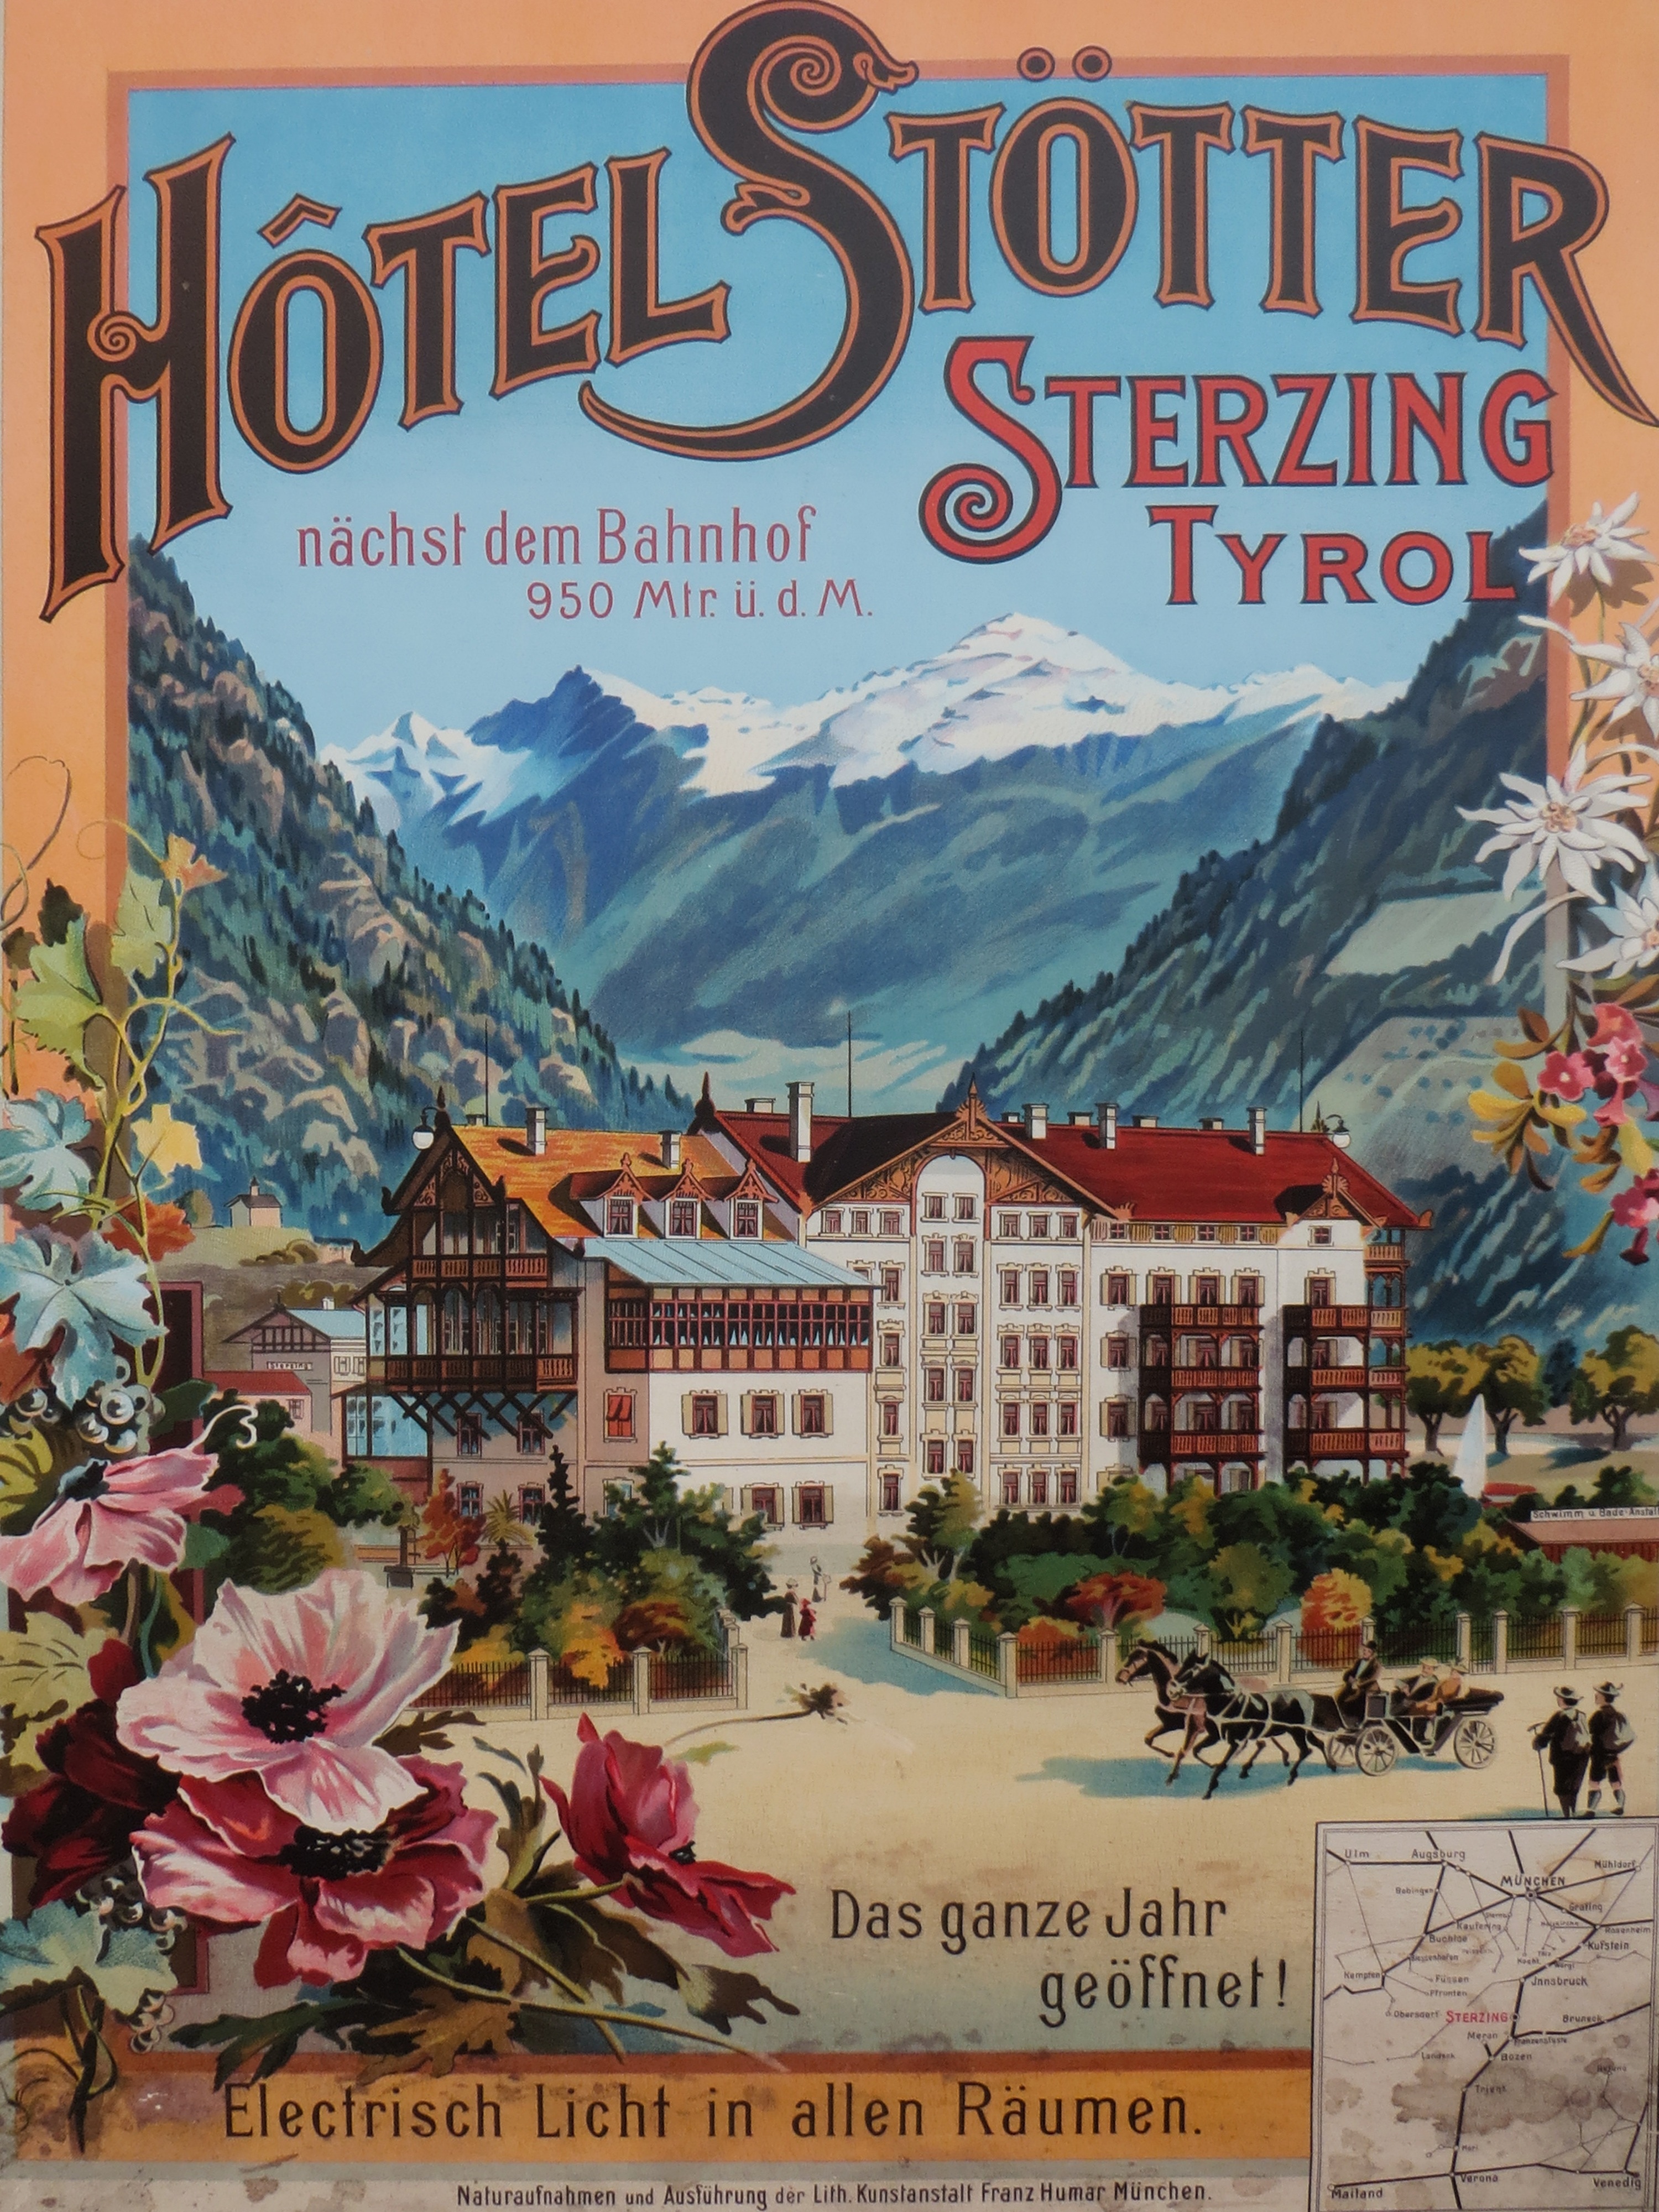 hotel stotter sterzing tyrol free image | Peakpx